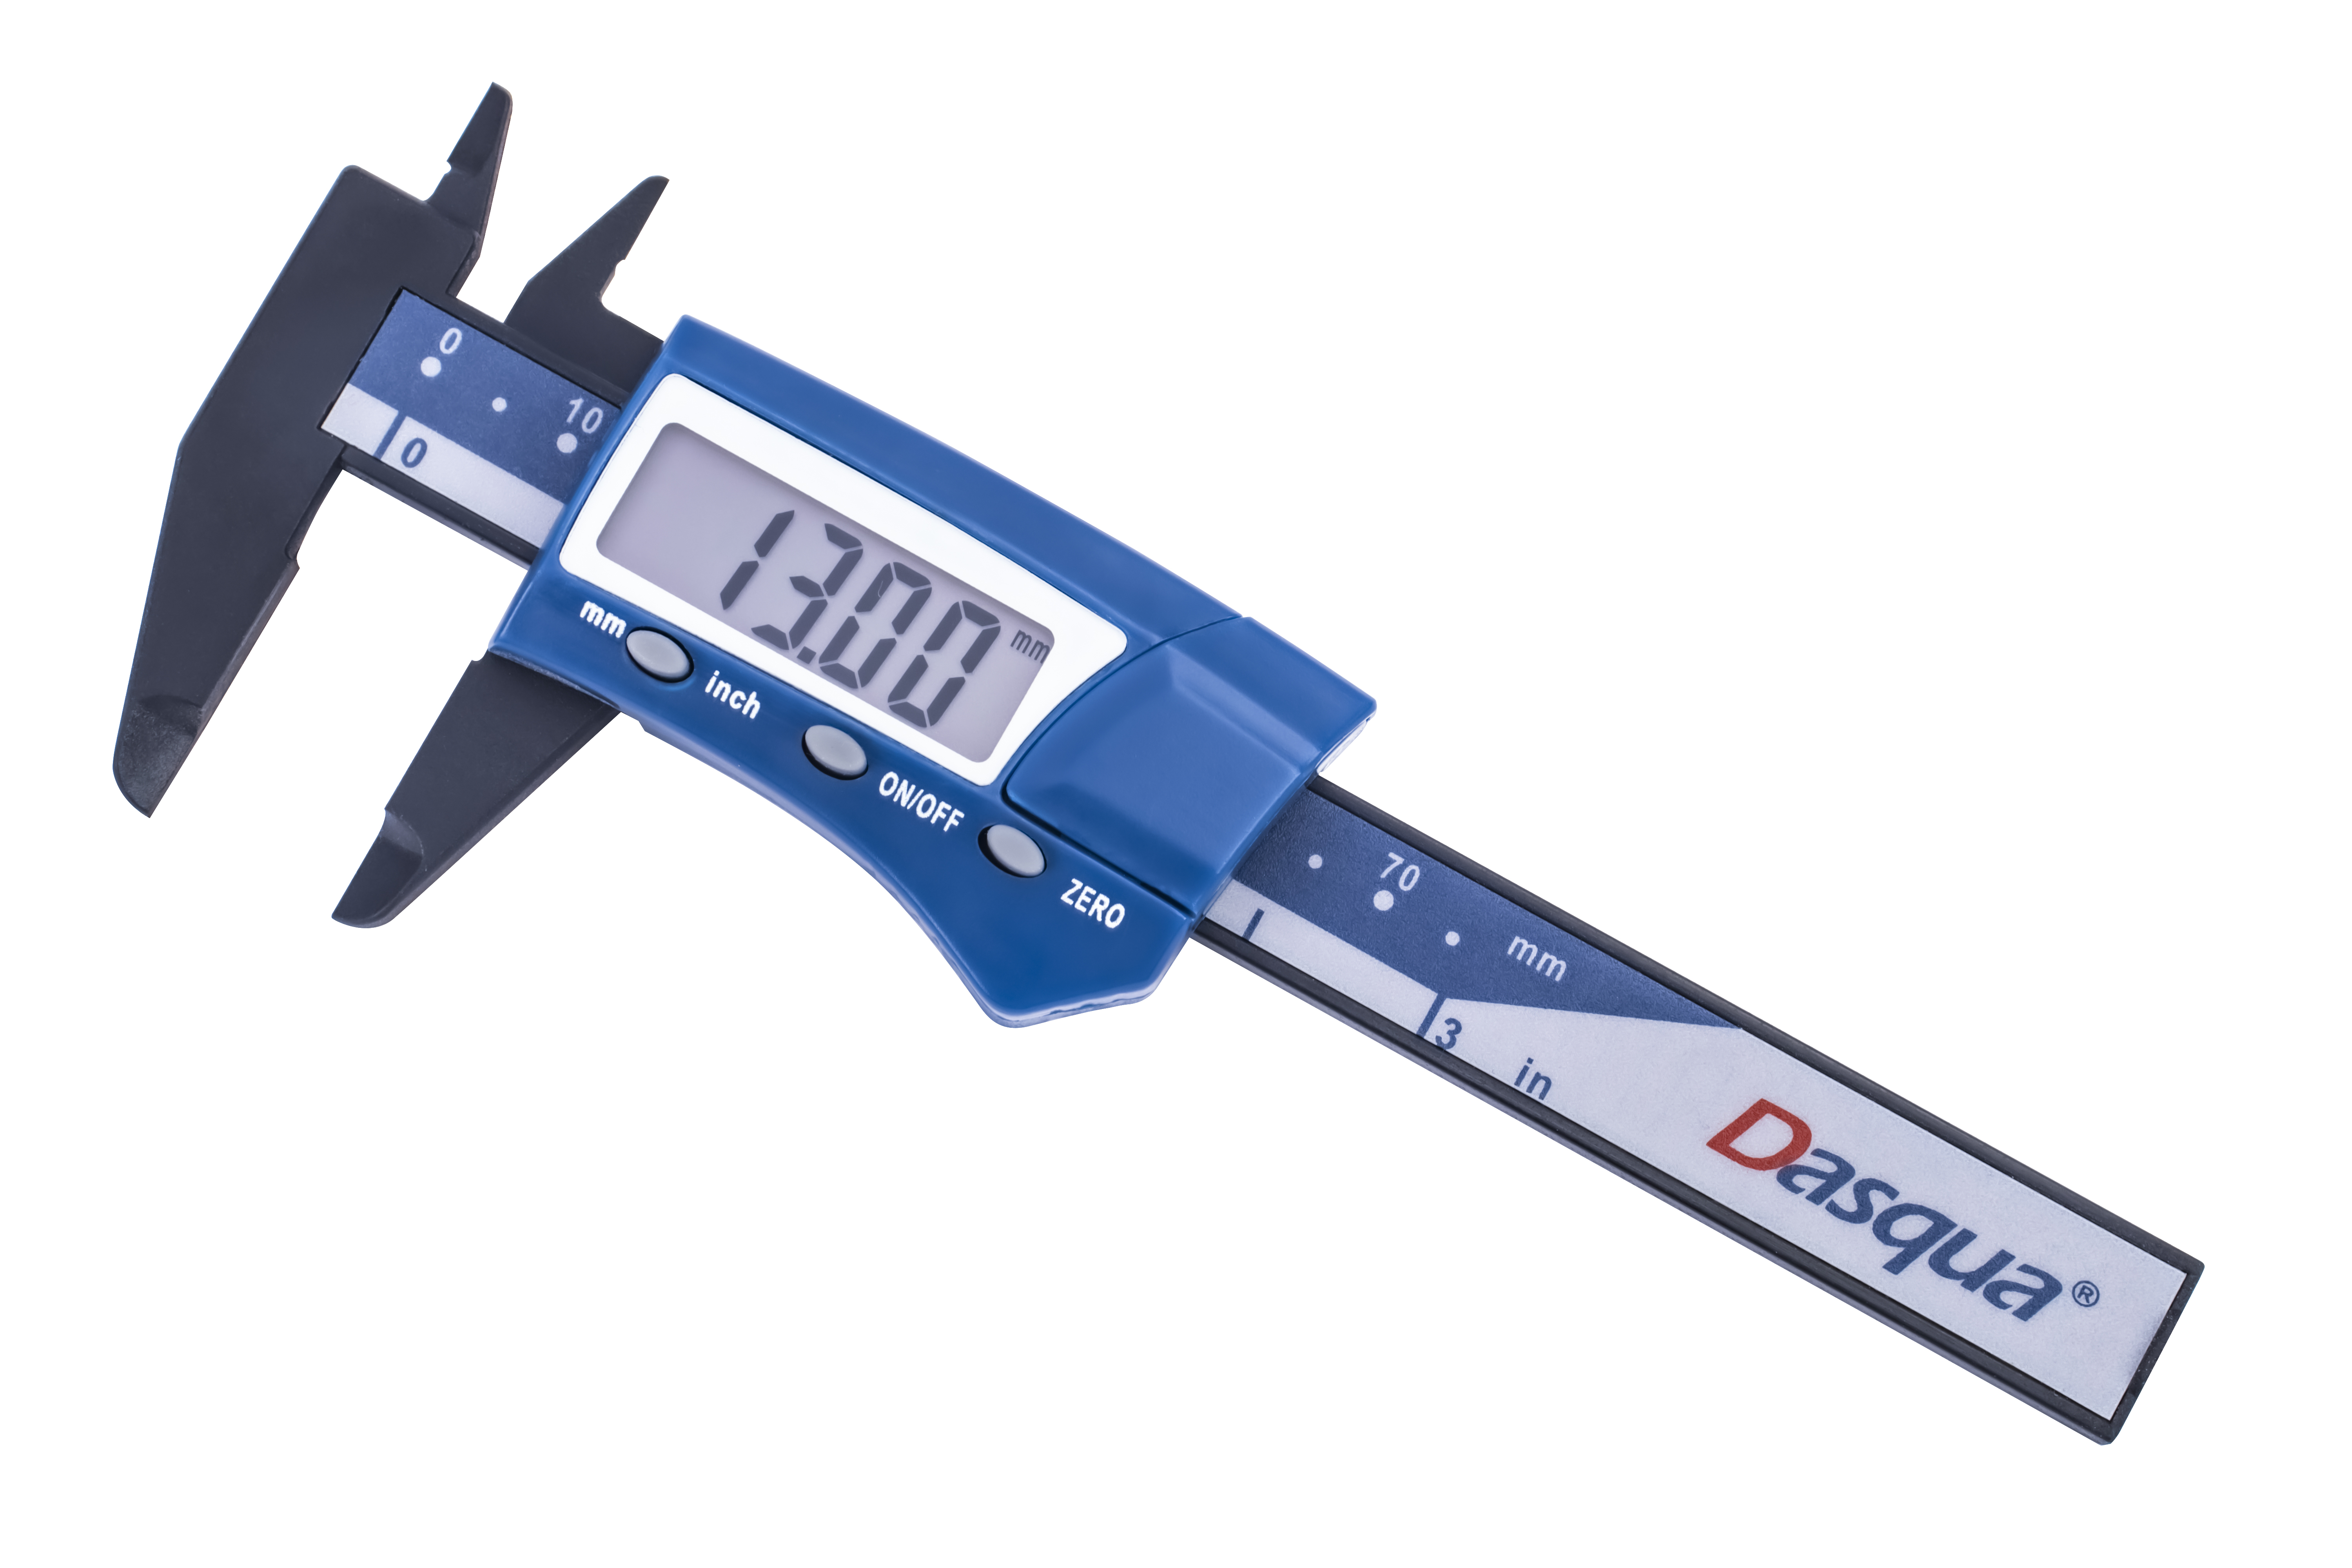 Dasqua 2035-0004 Plastic Digital Caliper - Lightweight and Accurate Measuring Tool for Precision Work